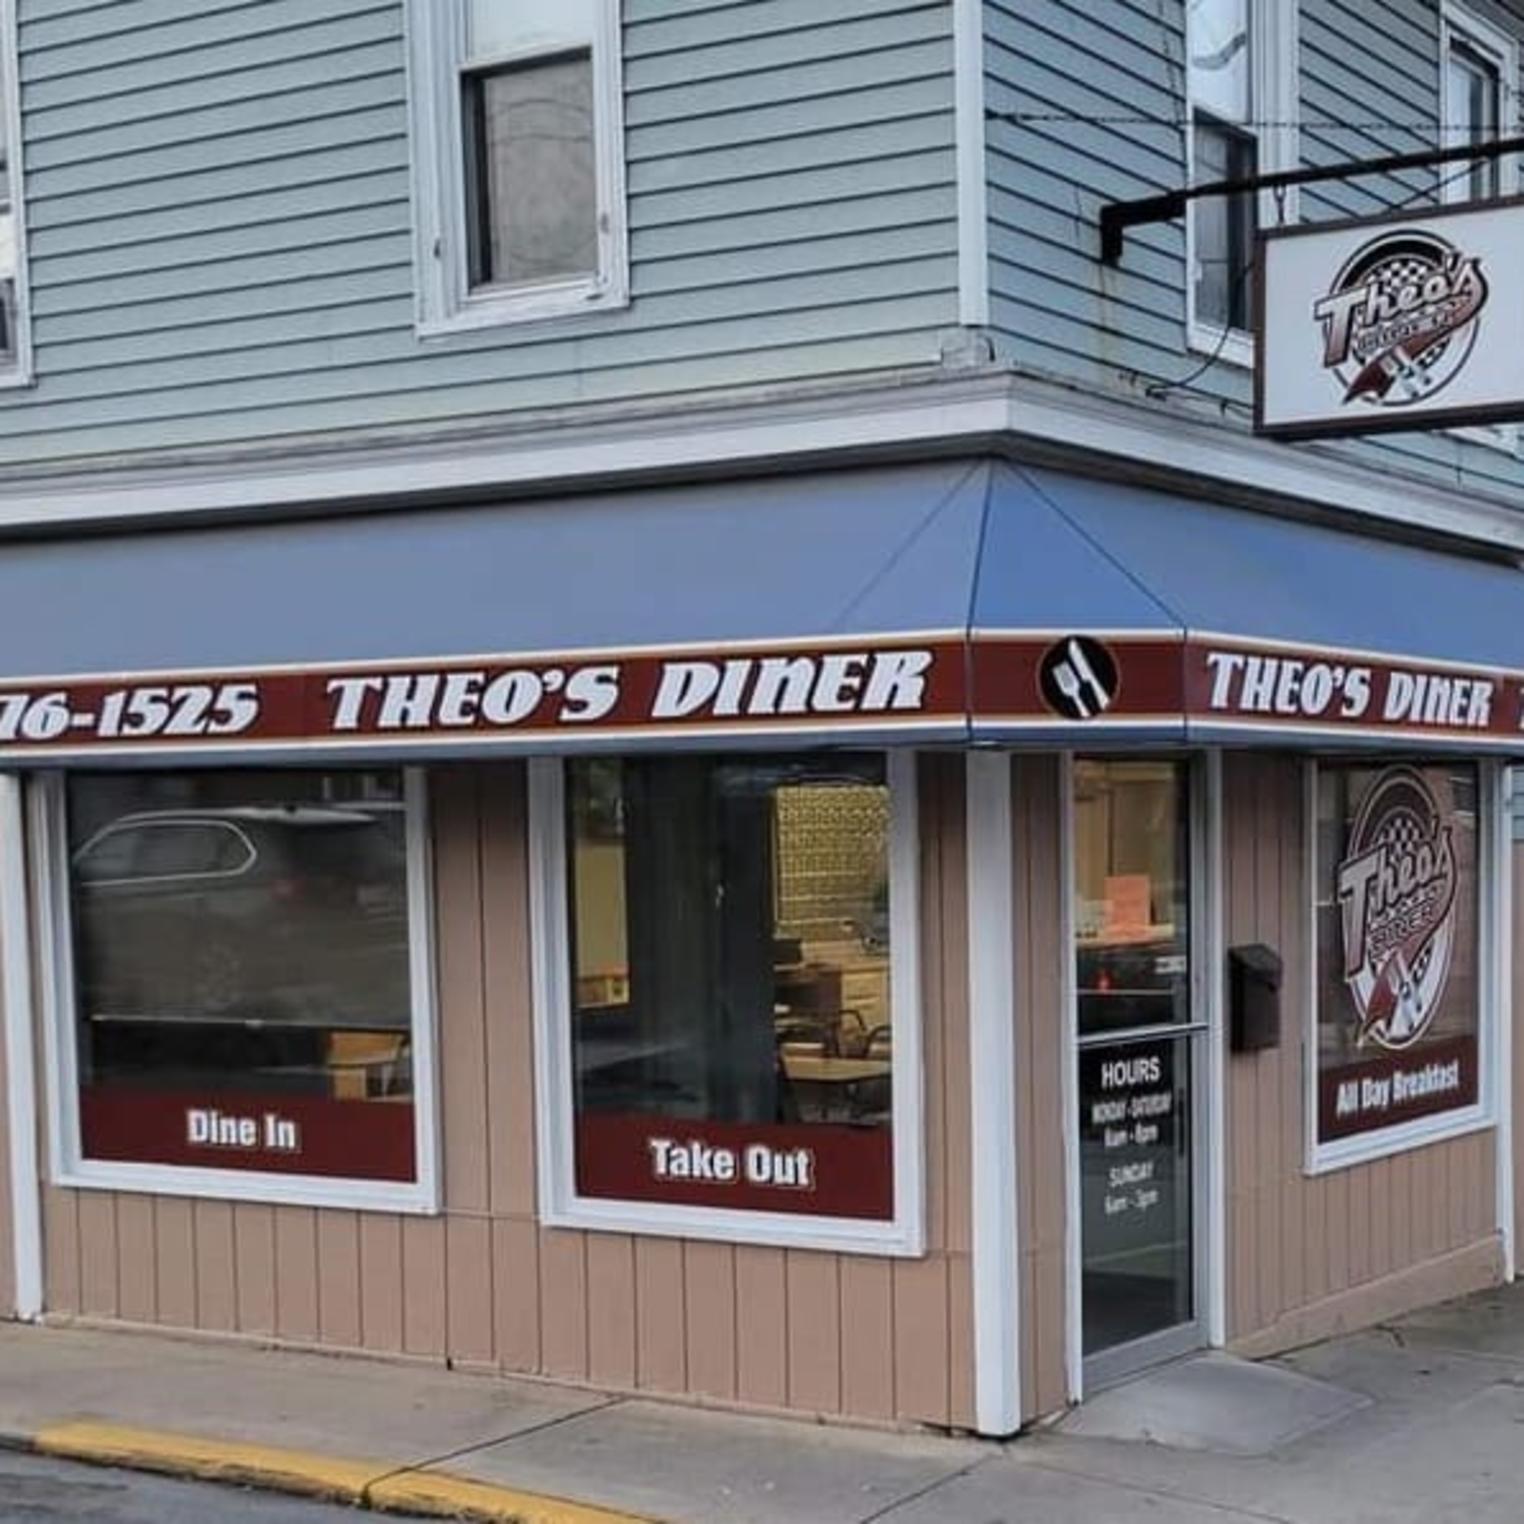 Theo's Diner